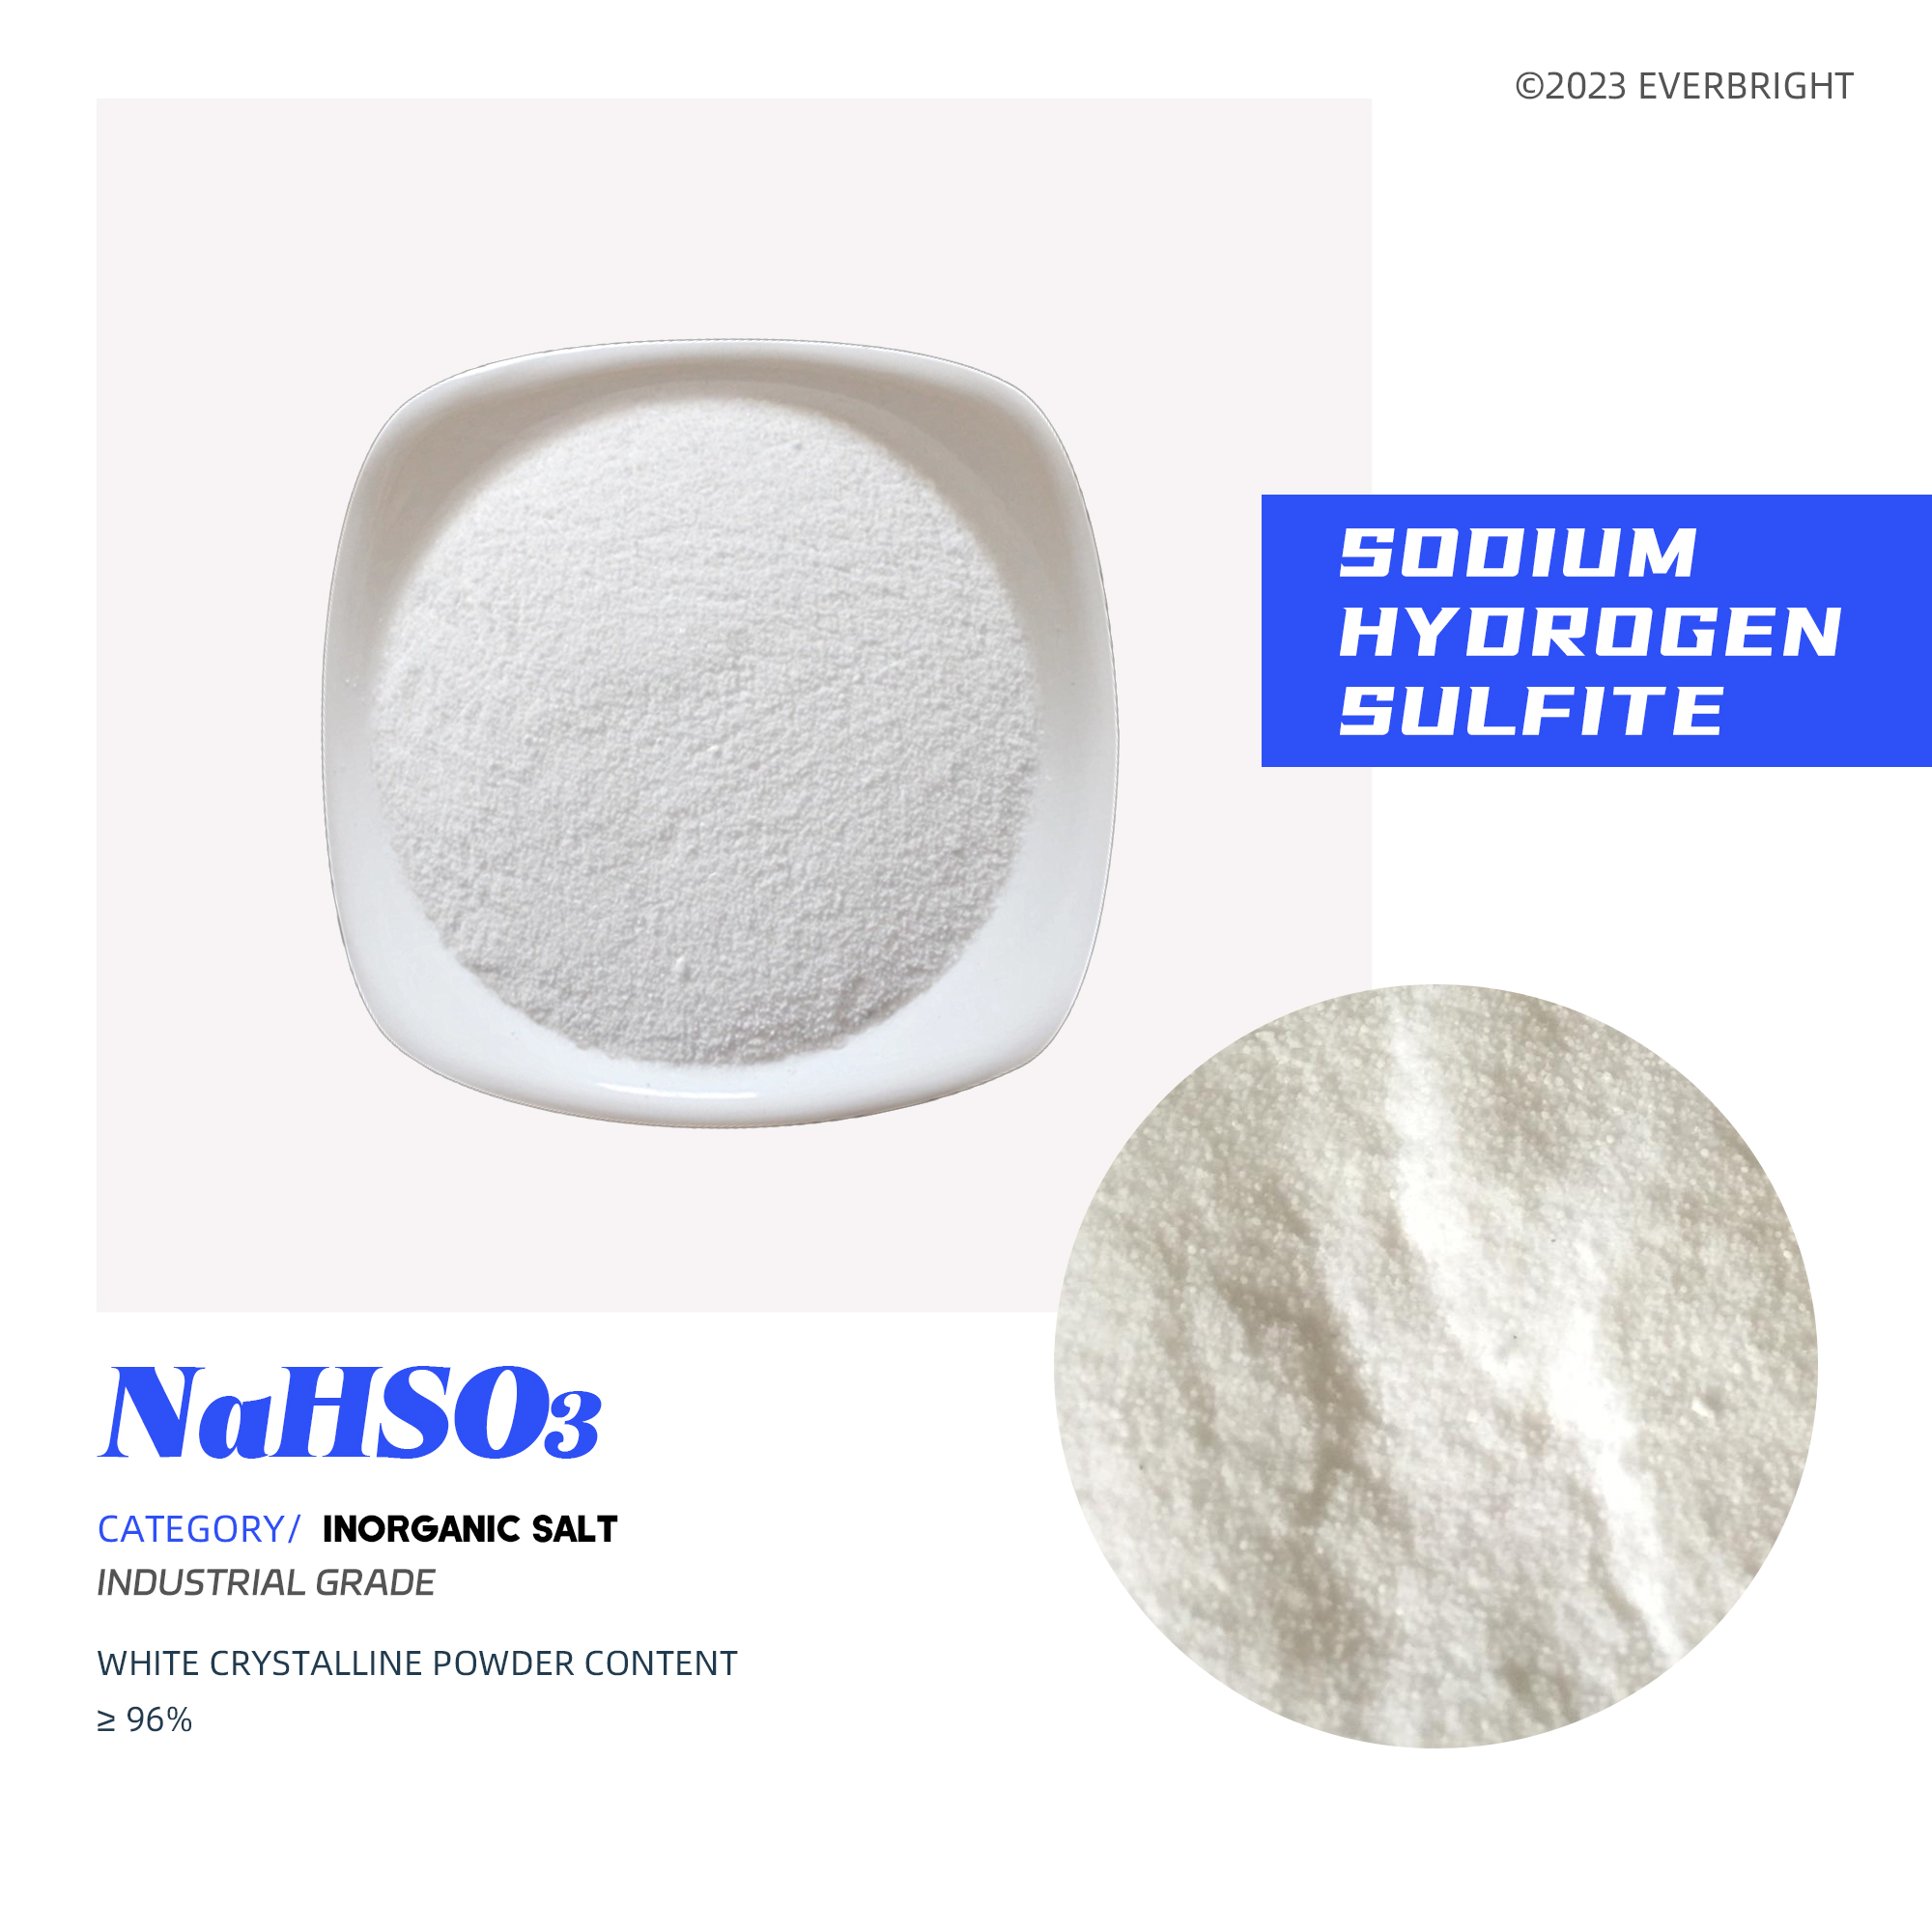 Natriumhydrogensulfit